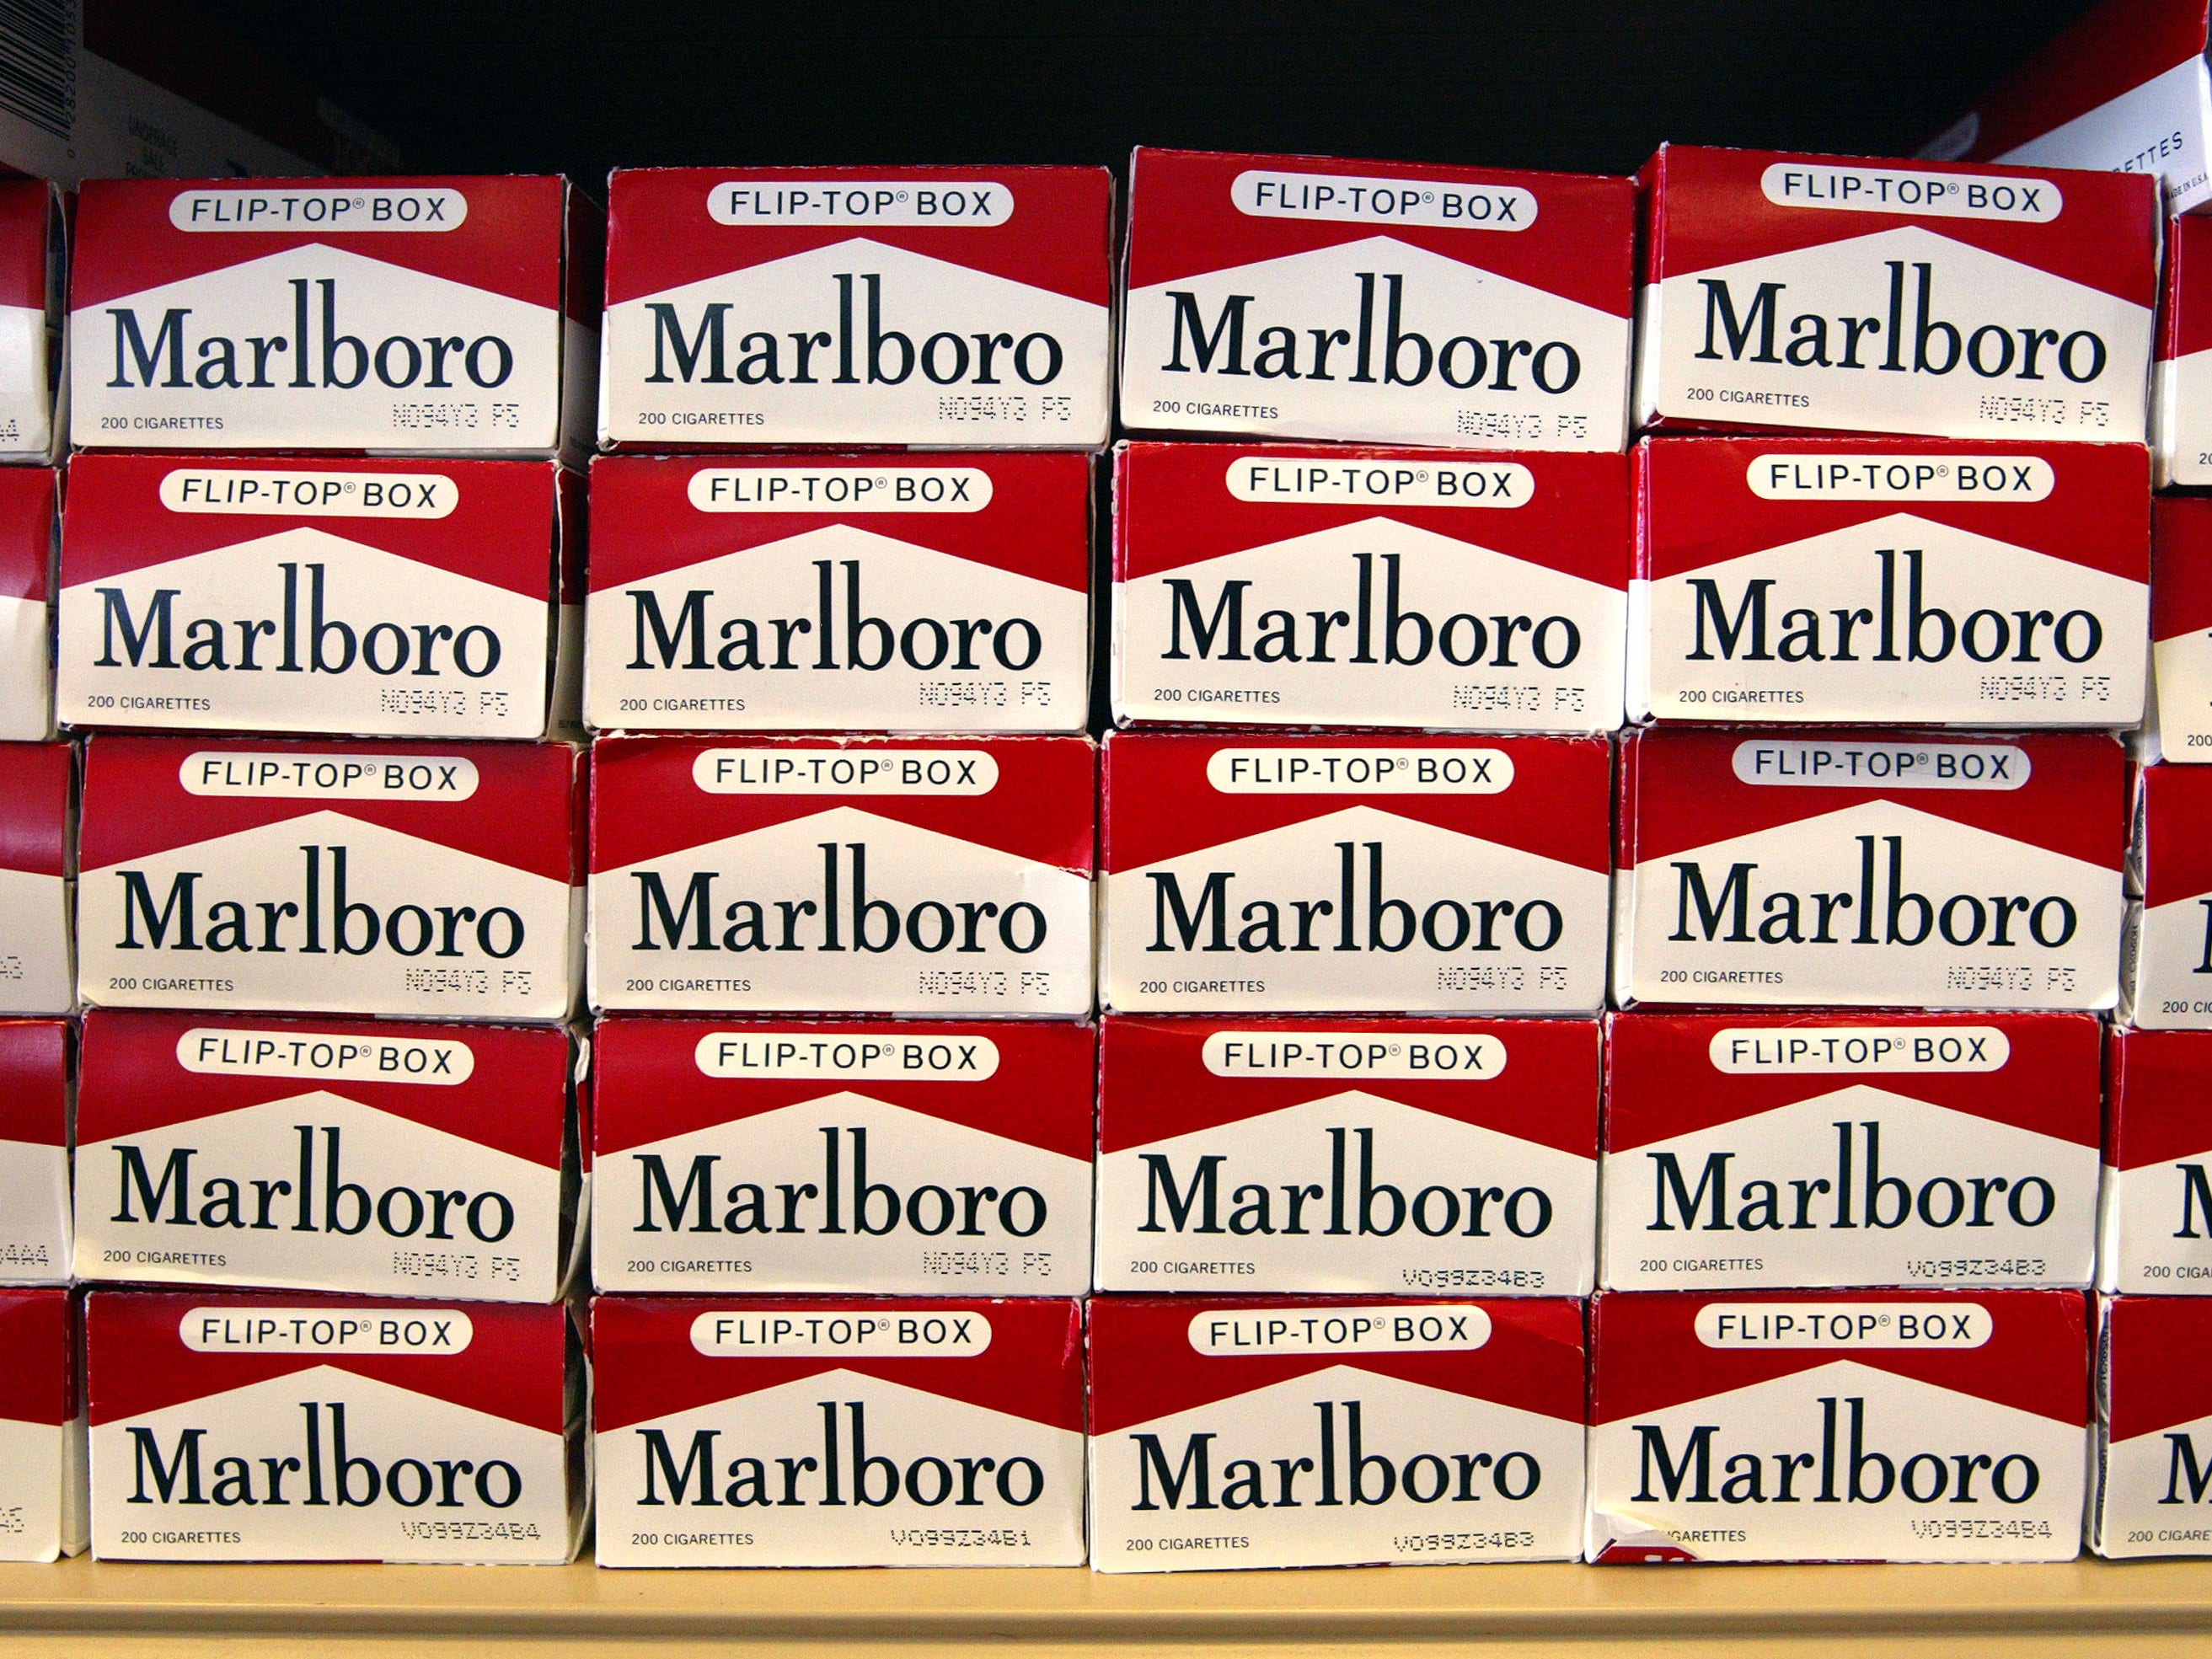 Marlboro maker cuts profit forecast as smokers swap to cheaper